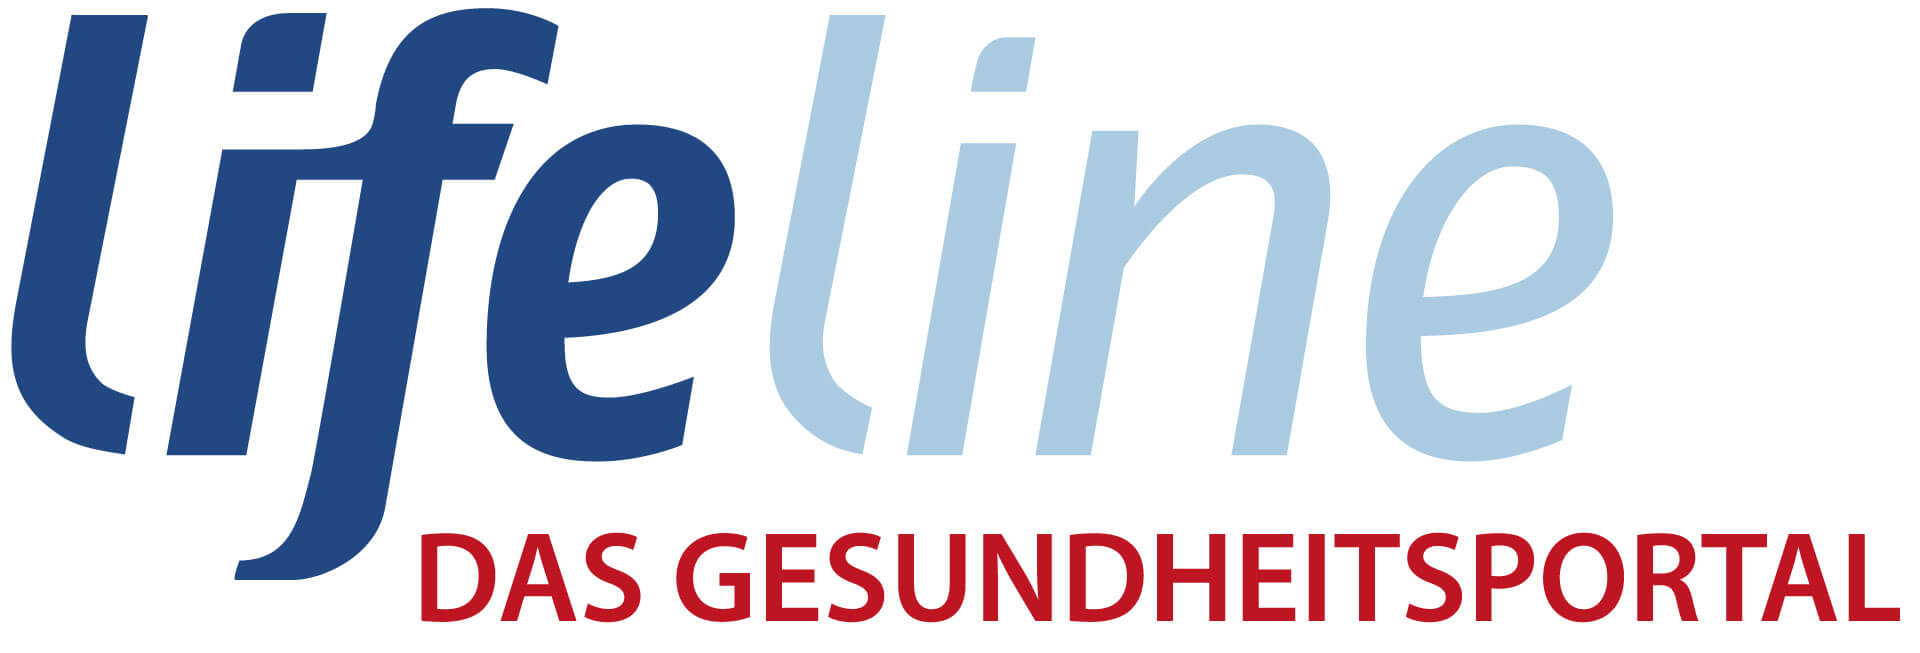 logo lifeline gesundheitsportal w1920px